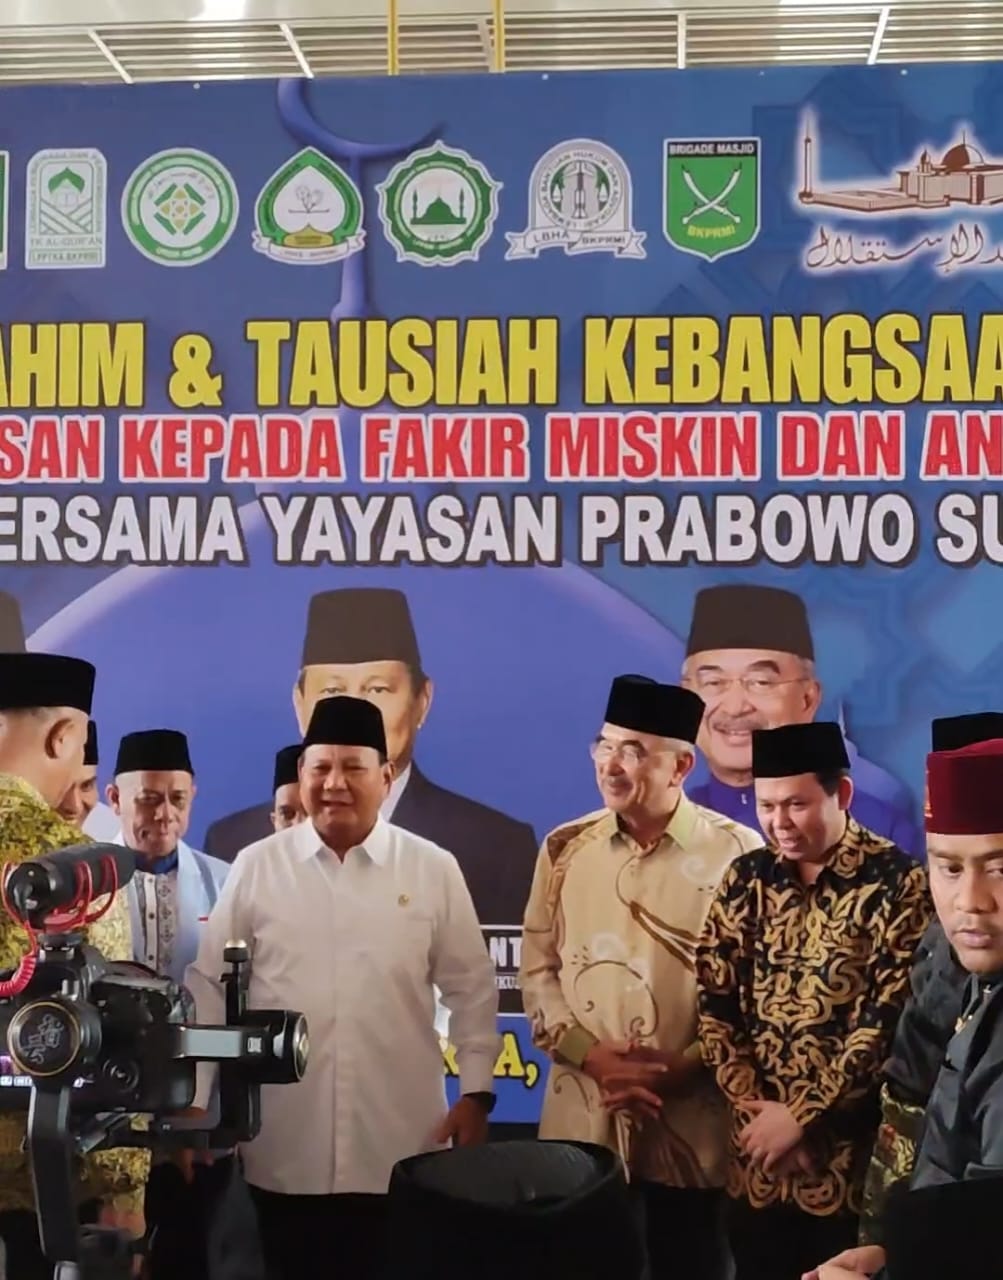 Presiden Dunia Melayu Dunia Islam: Prabowo Banyak Bantu Orang Miskin